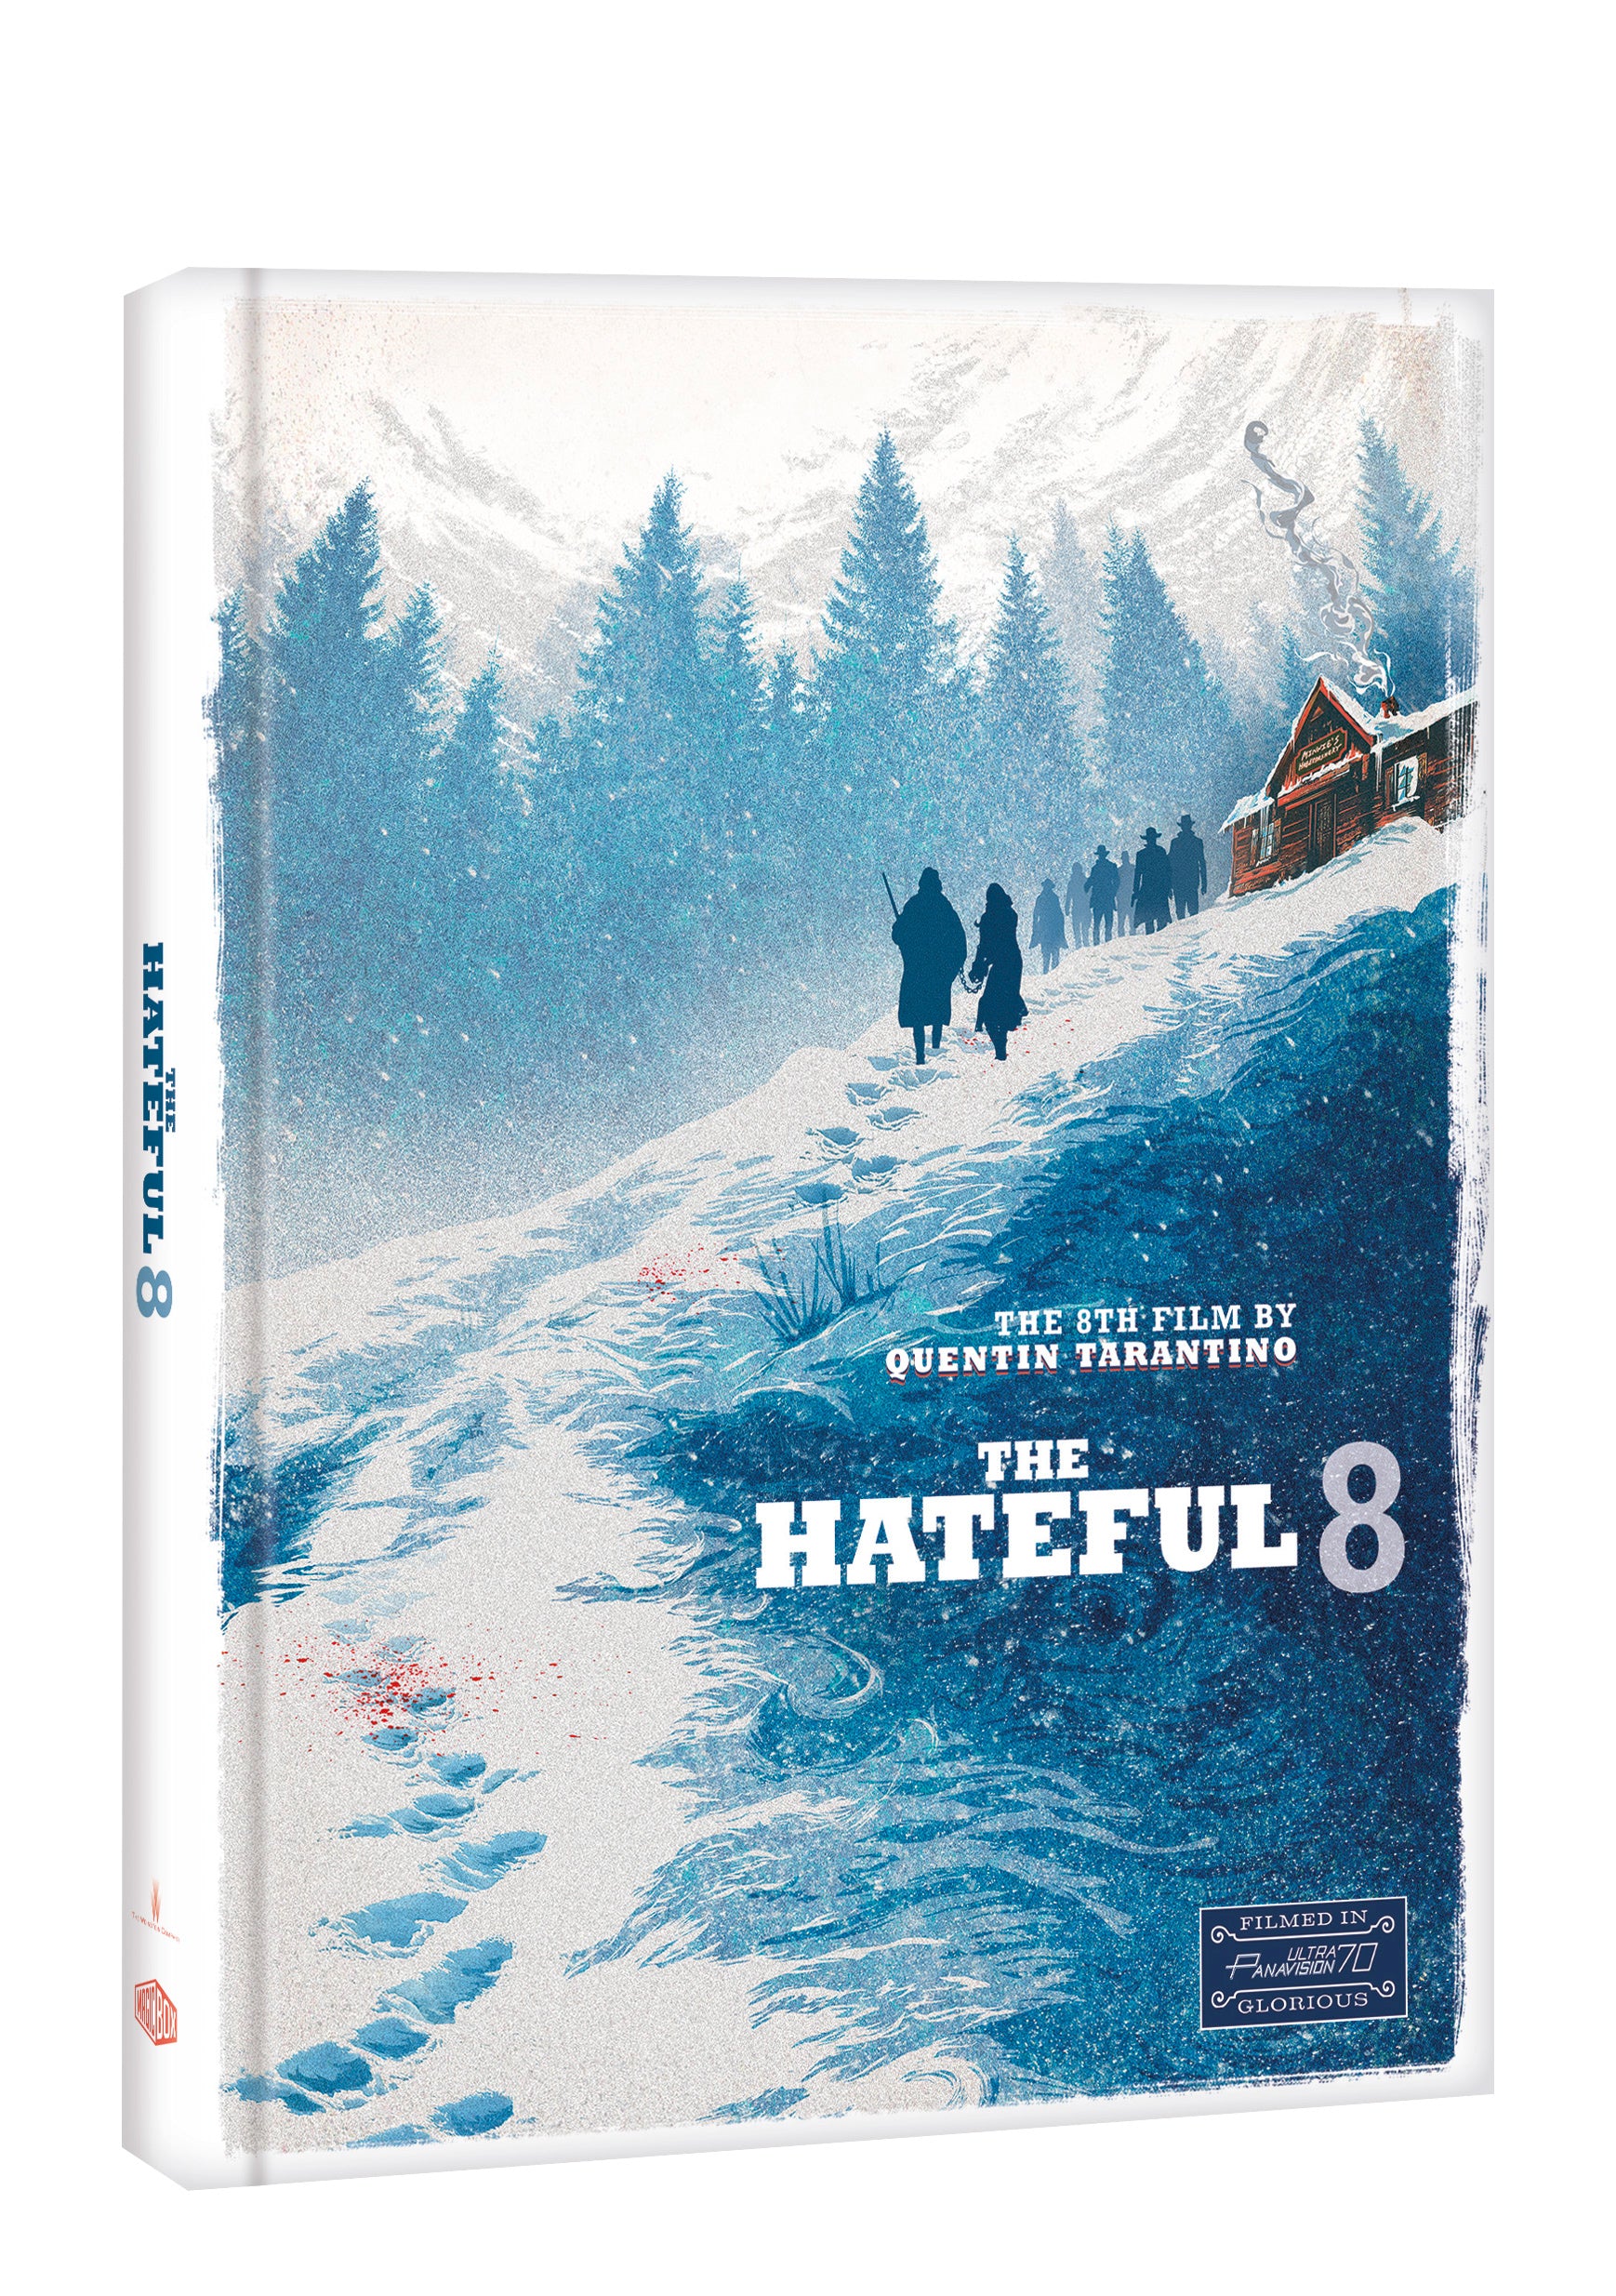 Osm hroznych - mediabook - limitovana edice BD / The Hateful Eight - Czech version